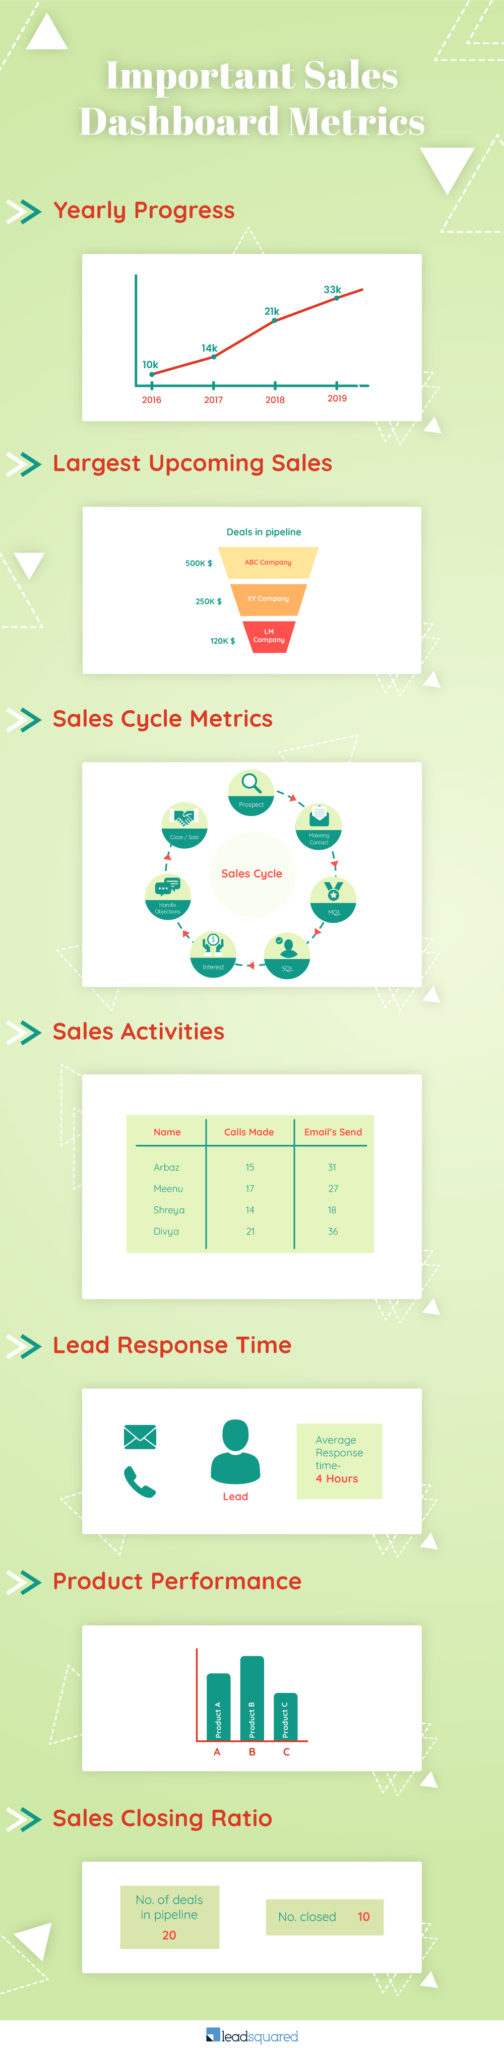 Sales Metrics Dashboard -infographic